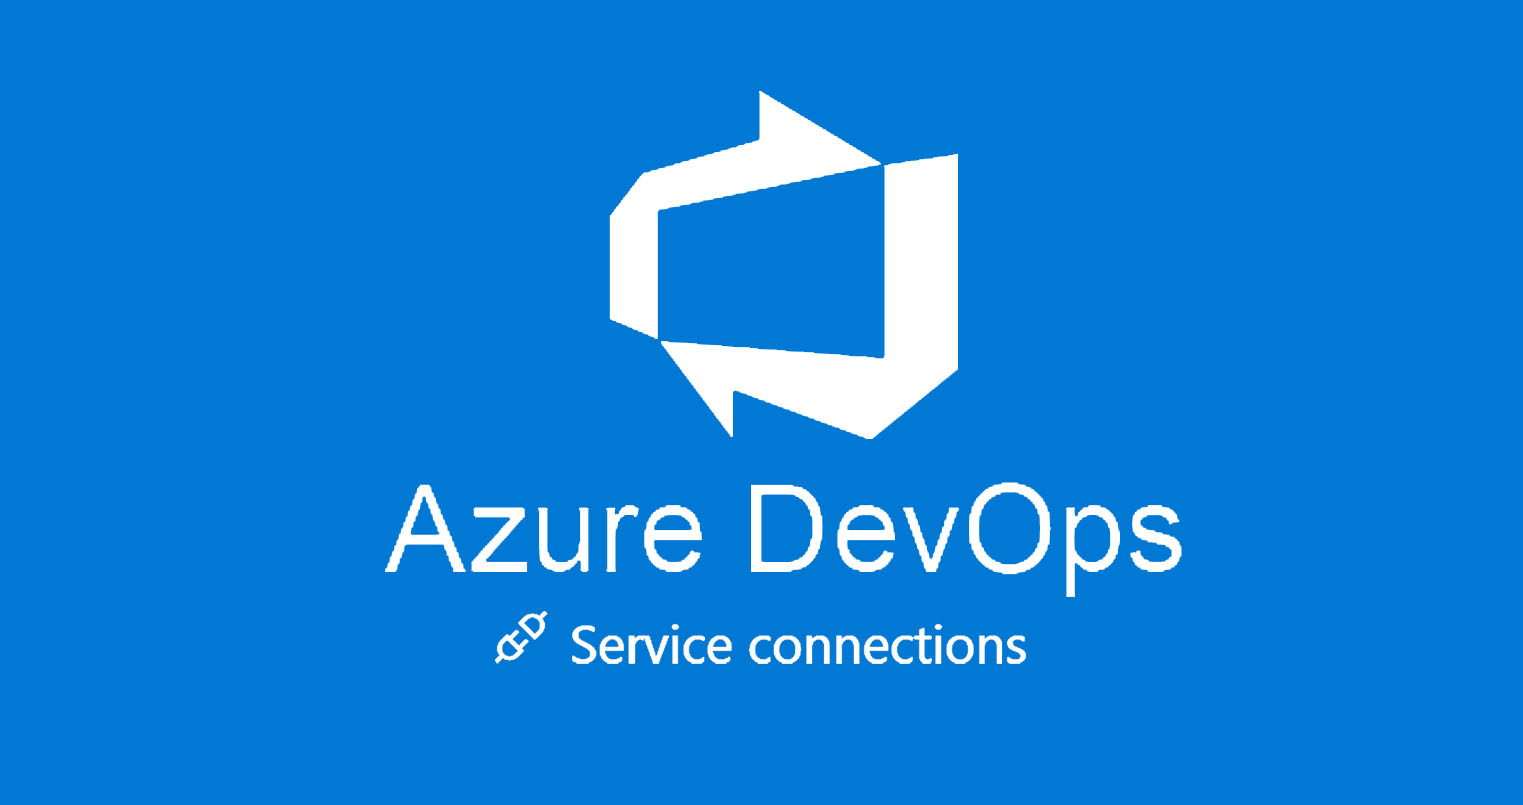 AzureDevOps Utiliser des Services Connections non natifs